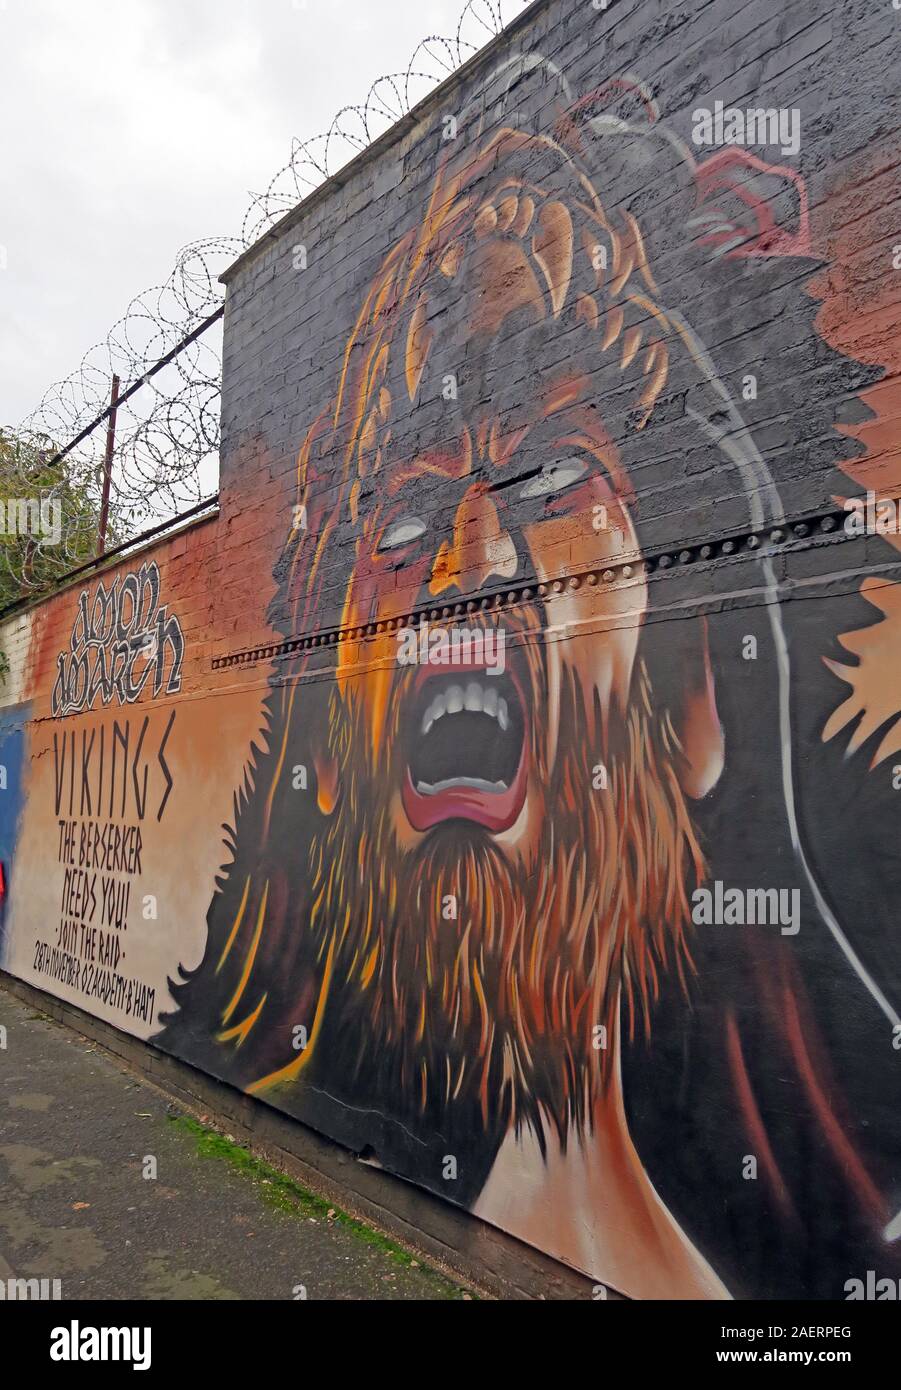 Amon Amarth visite Berserker, Graffiti Street art urbain, à la porte d'inondation St, Digbeth, Bordesley & Highgate, Birmingham, West Midlands, Angleterre, Royaume-Uni, B5 5ST Banque D'Images